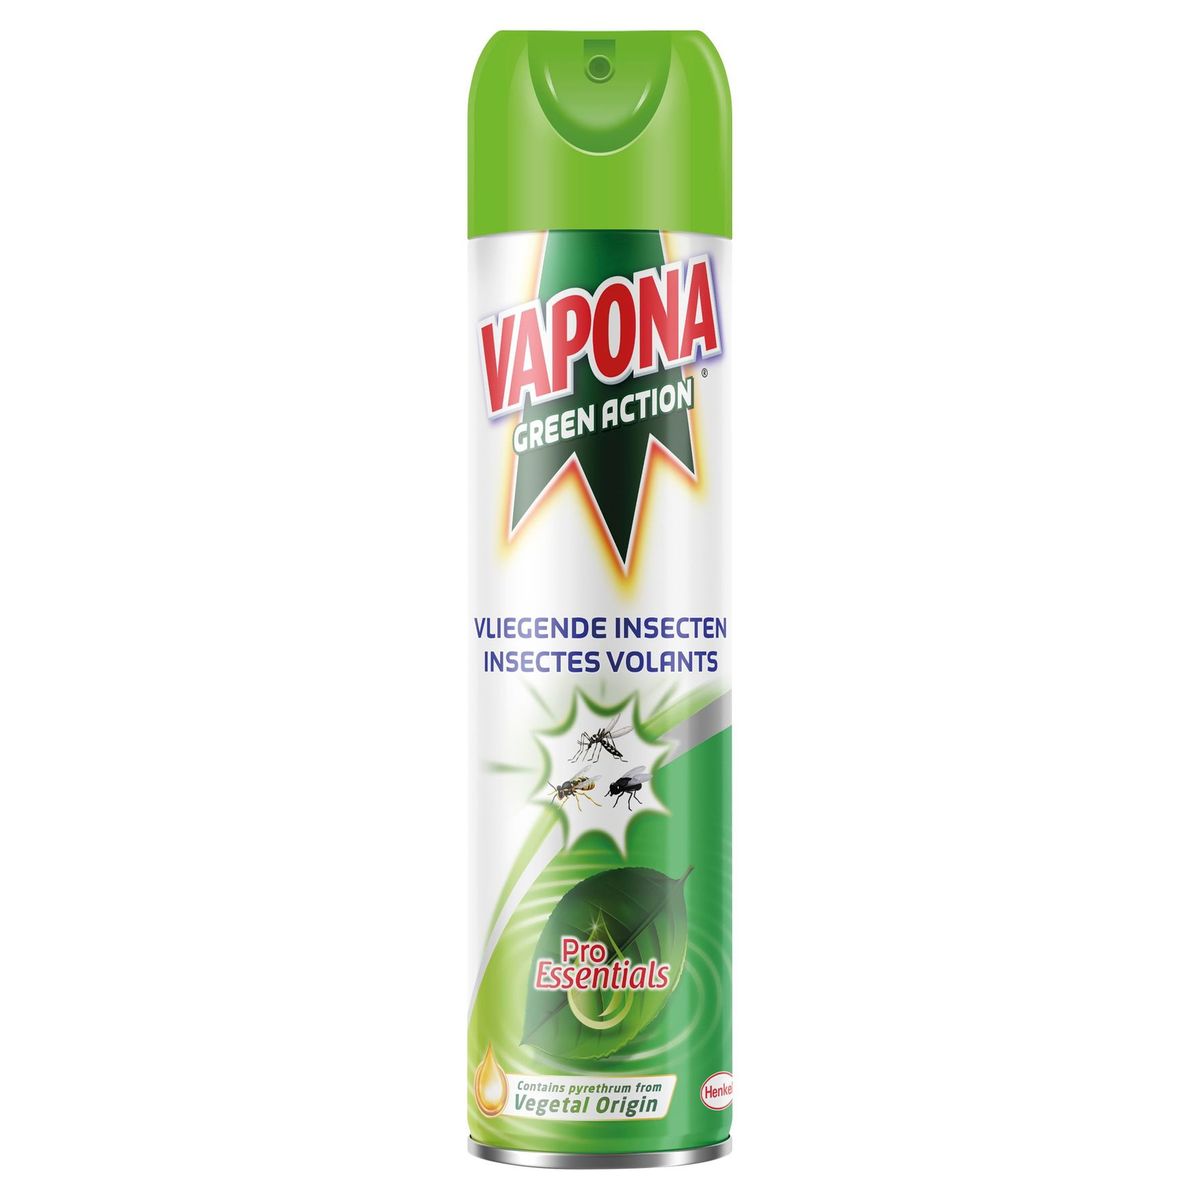 Vapona Green Action Insectes Volants Spray 400ml